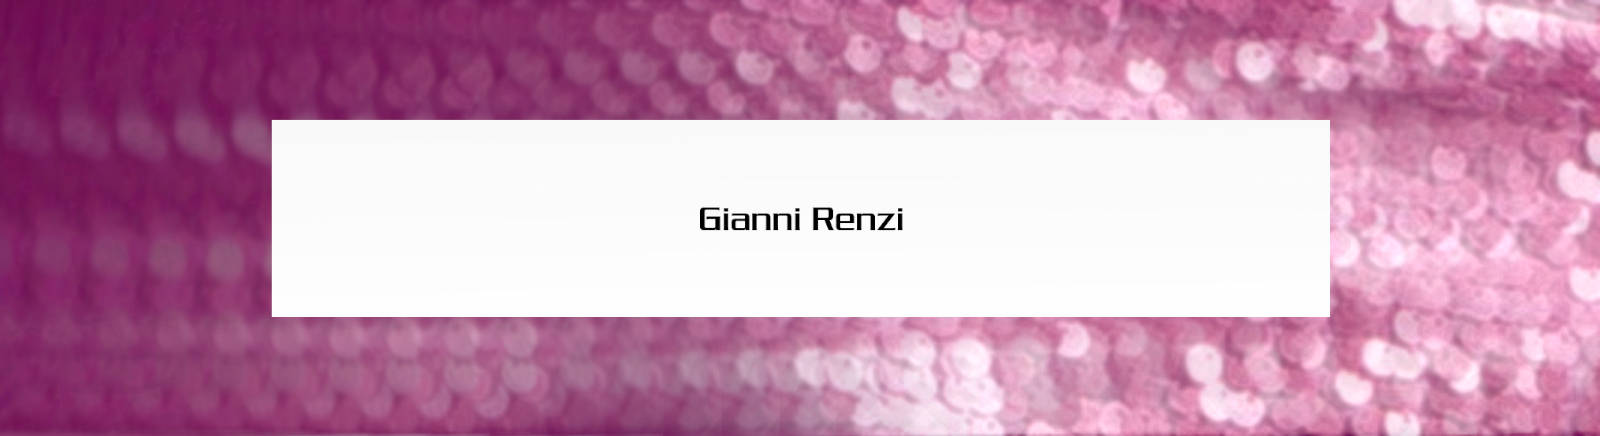 Prange: Gianni Renzi Sneaker für Herren online shoppen